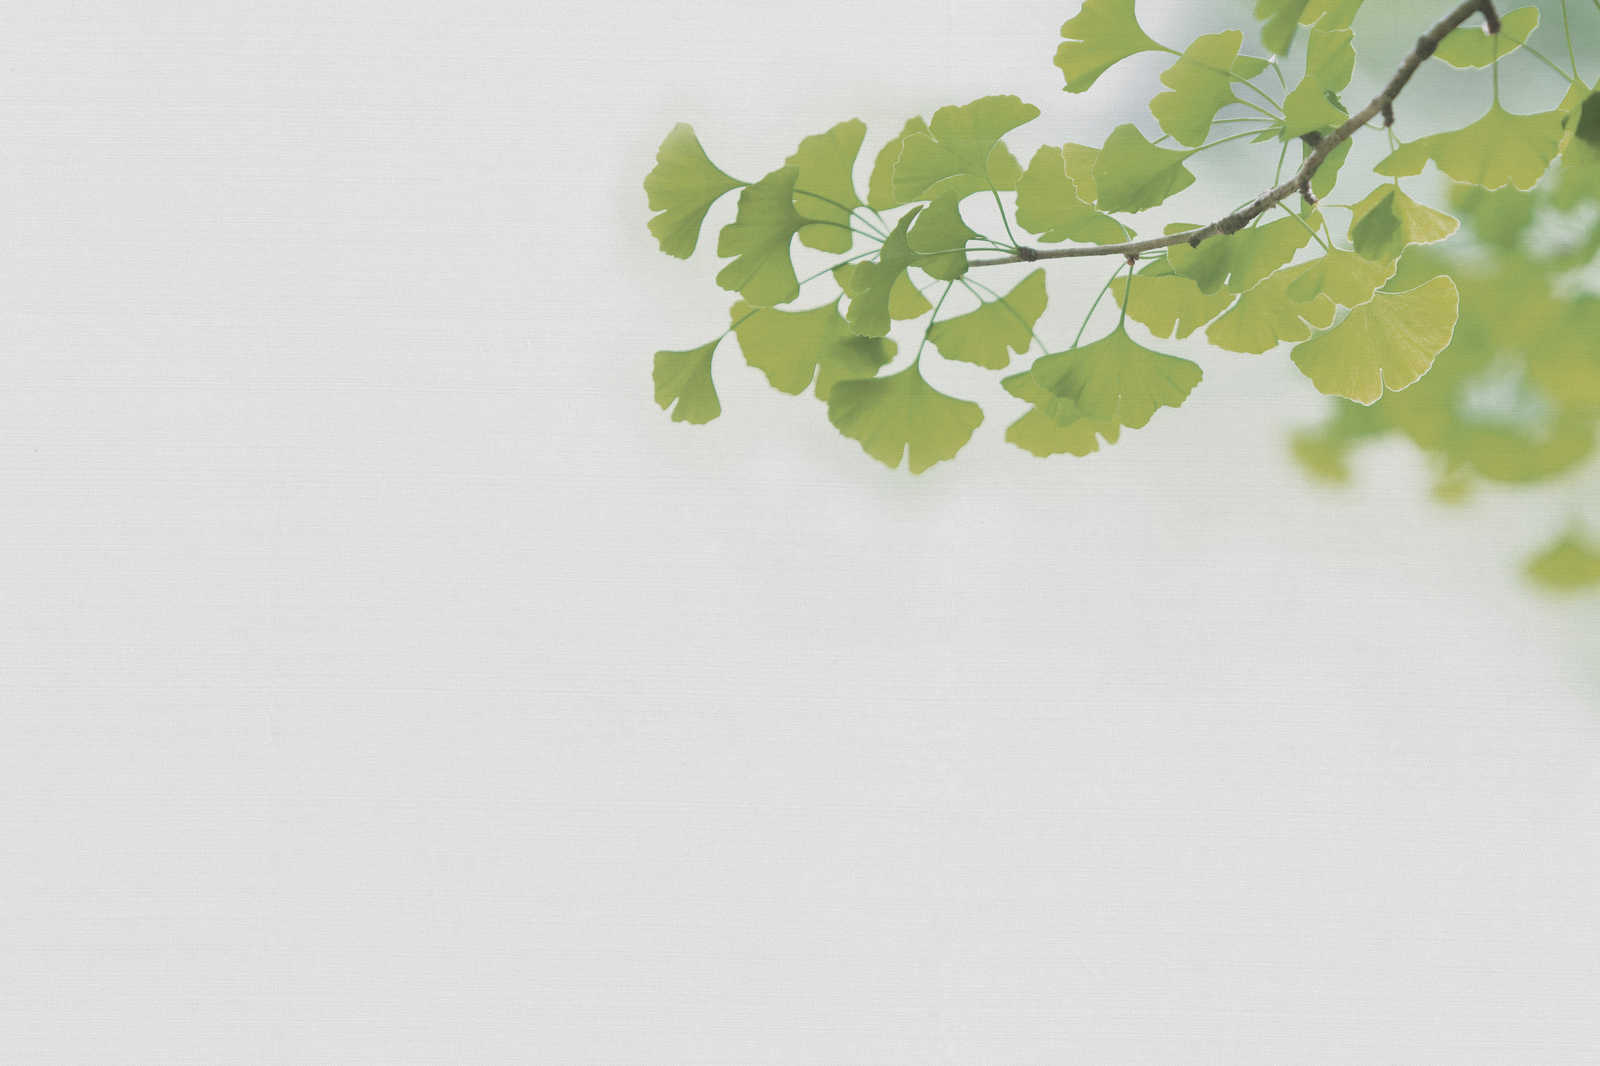             Cuadro en lienzo con imagen de rama de Ginko | verde, blanco - 0,90 m x 0,60 m
        